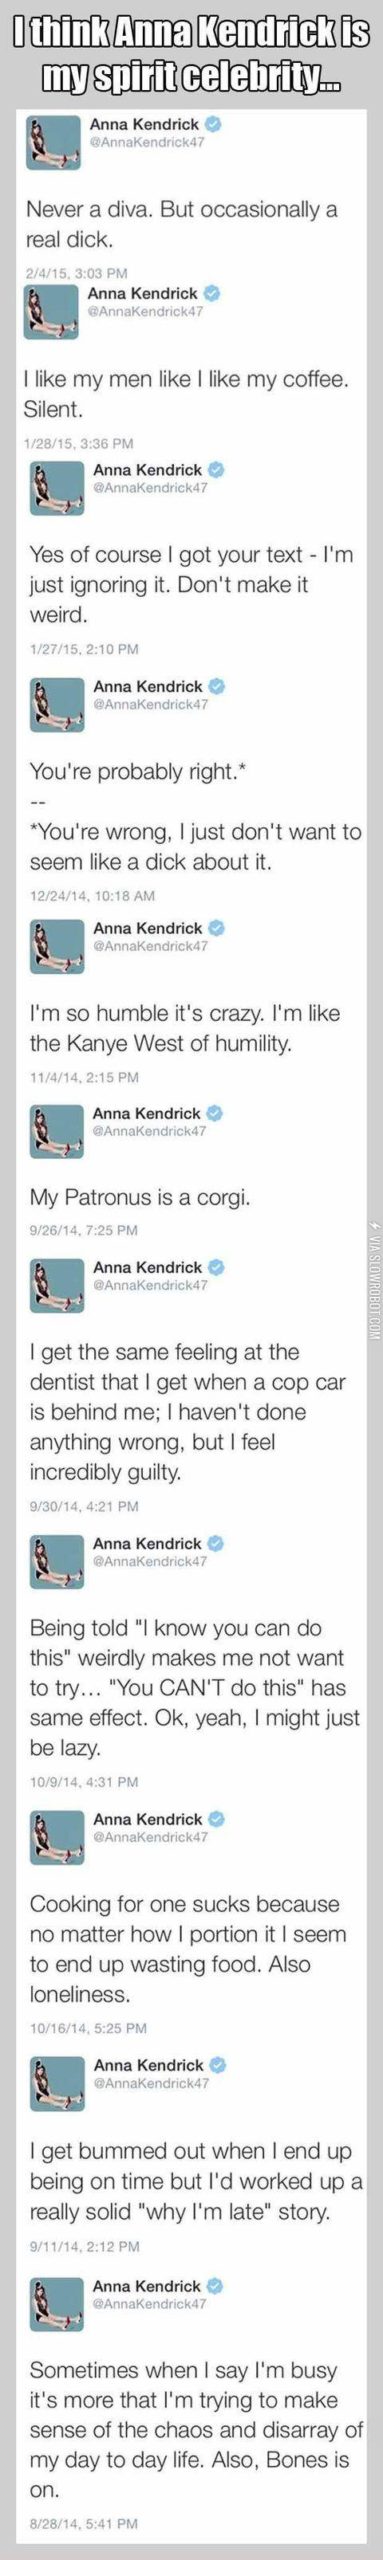 Anna+Kendrick